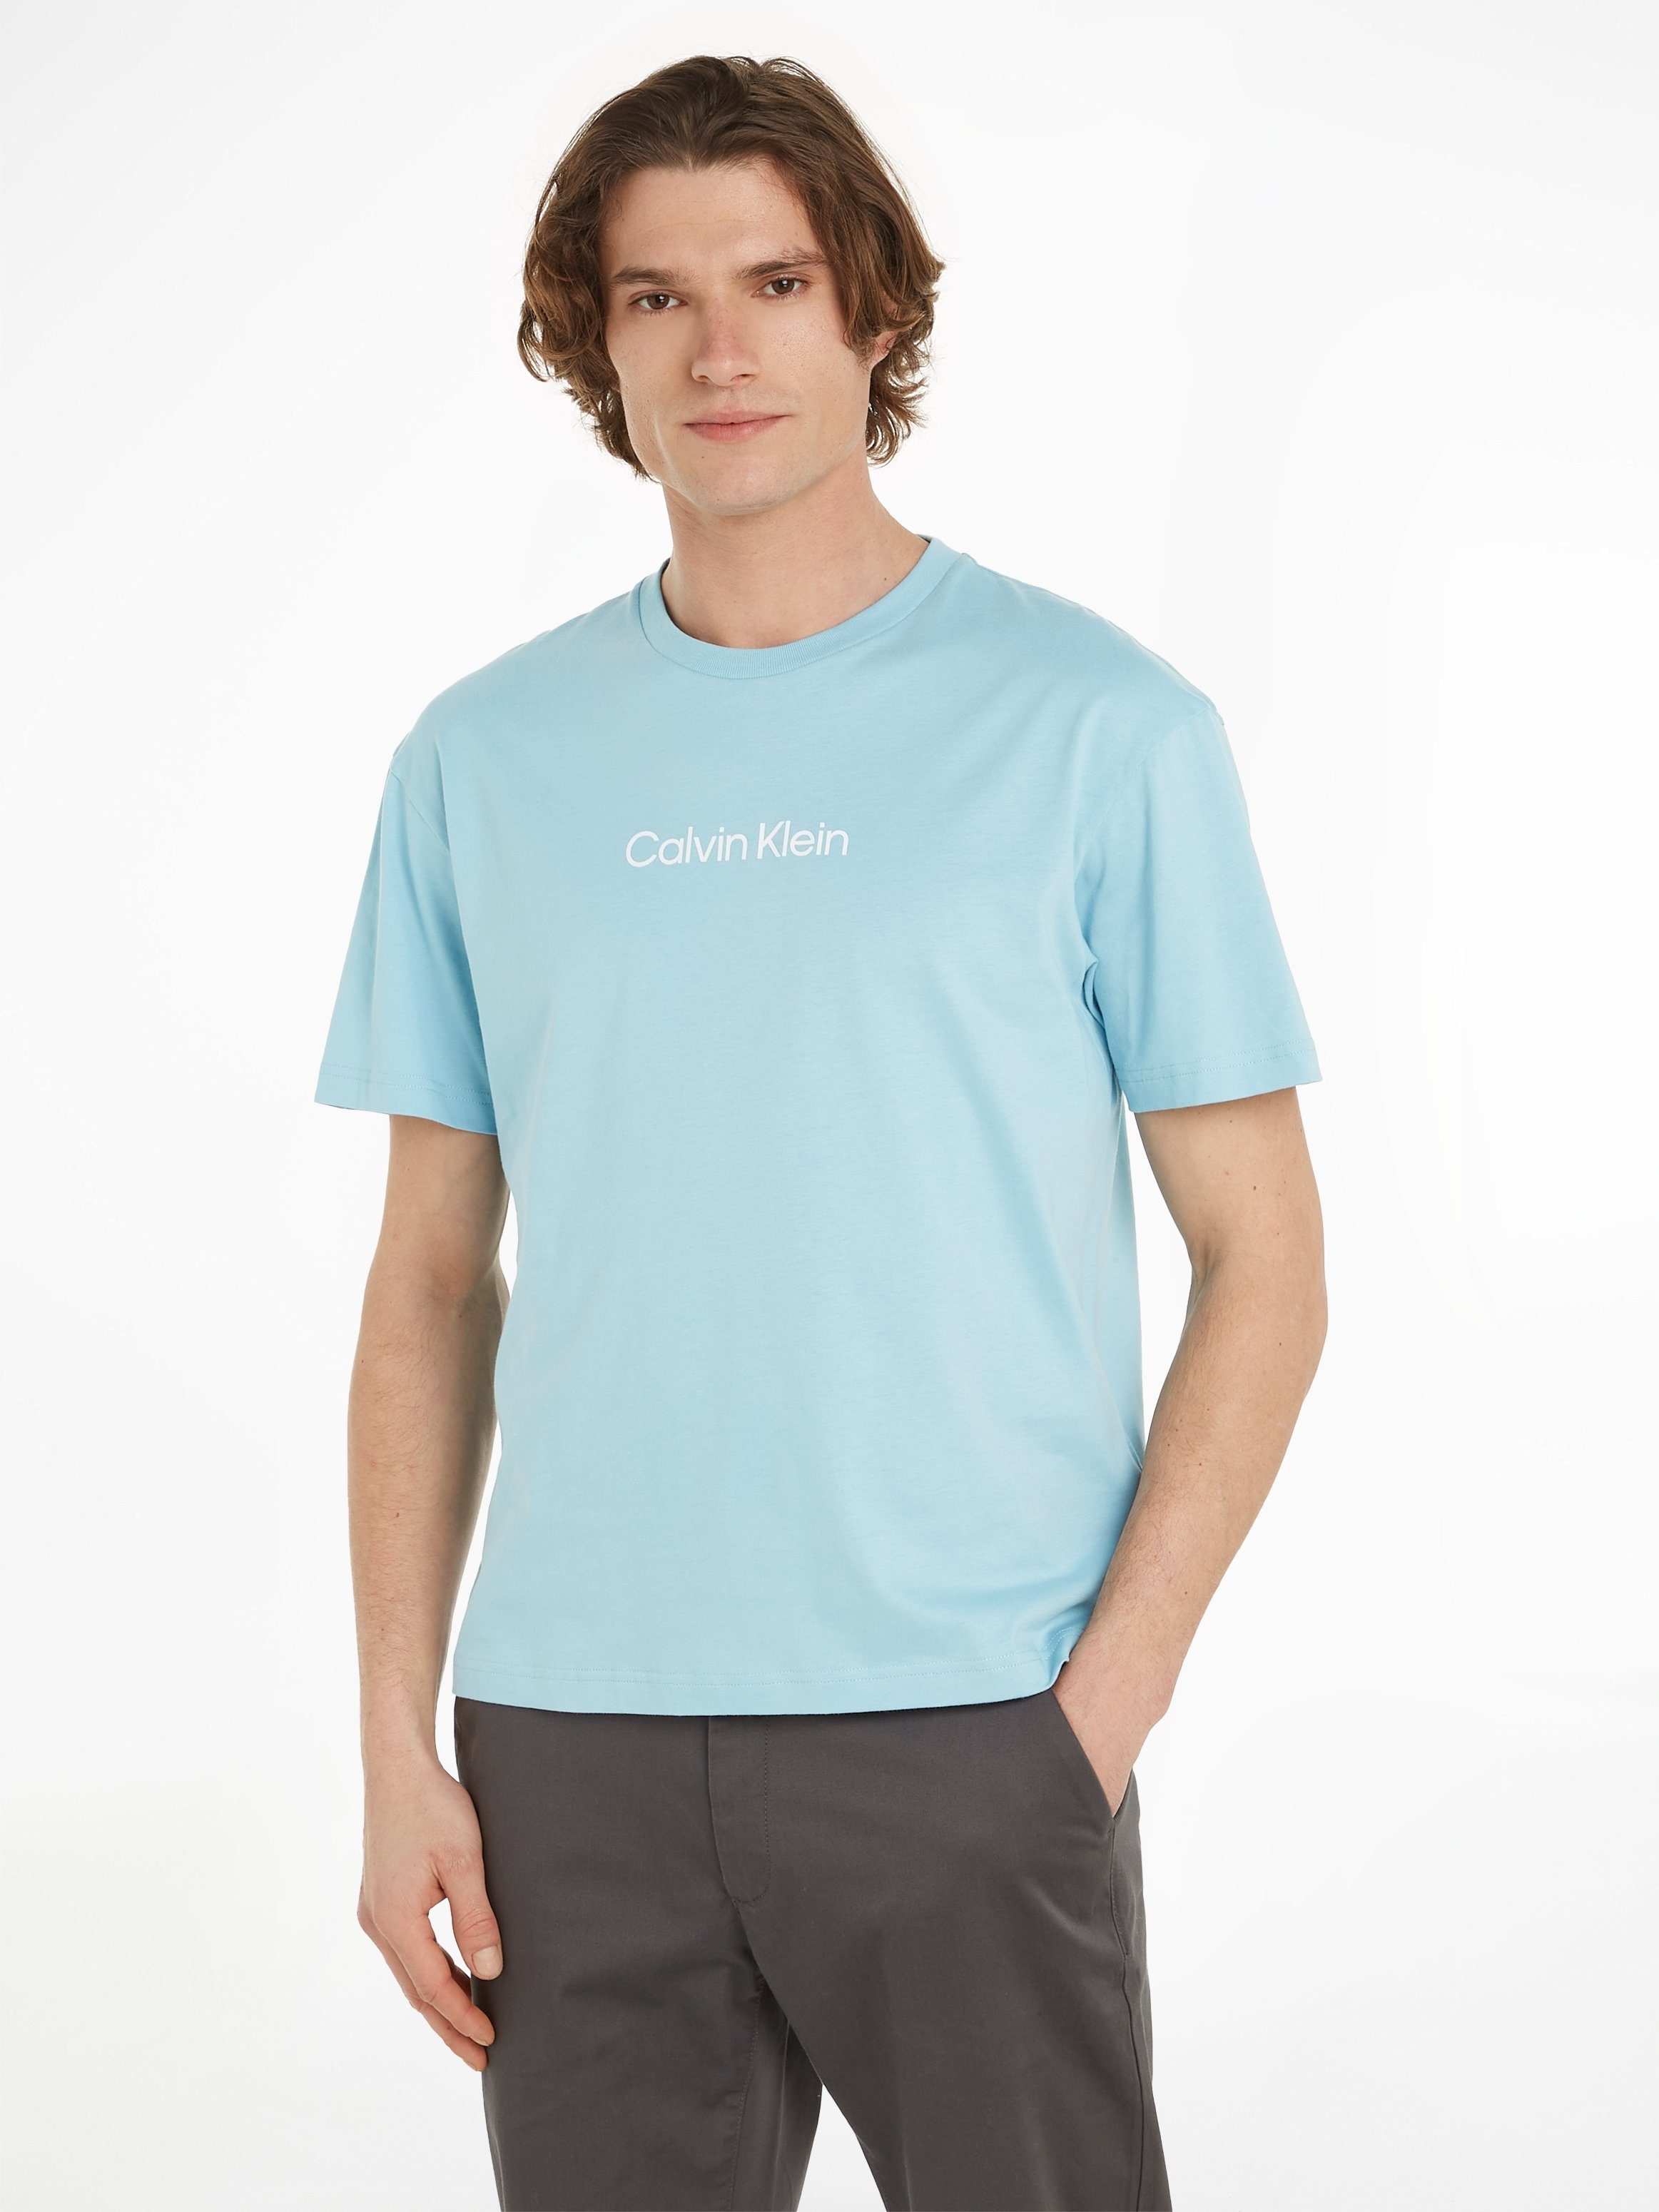 Calvin Klein T-Shirt HERO LOGO mit T-SHIRT aufgedrucktem Blue COMFORT Markenlabel Tropic